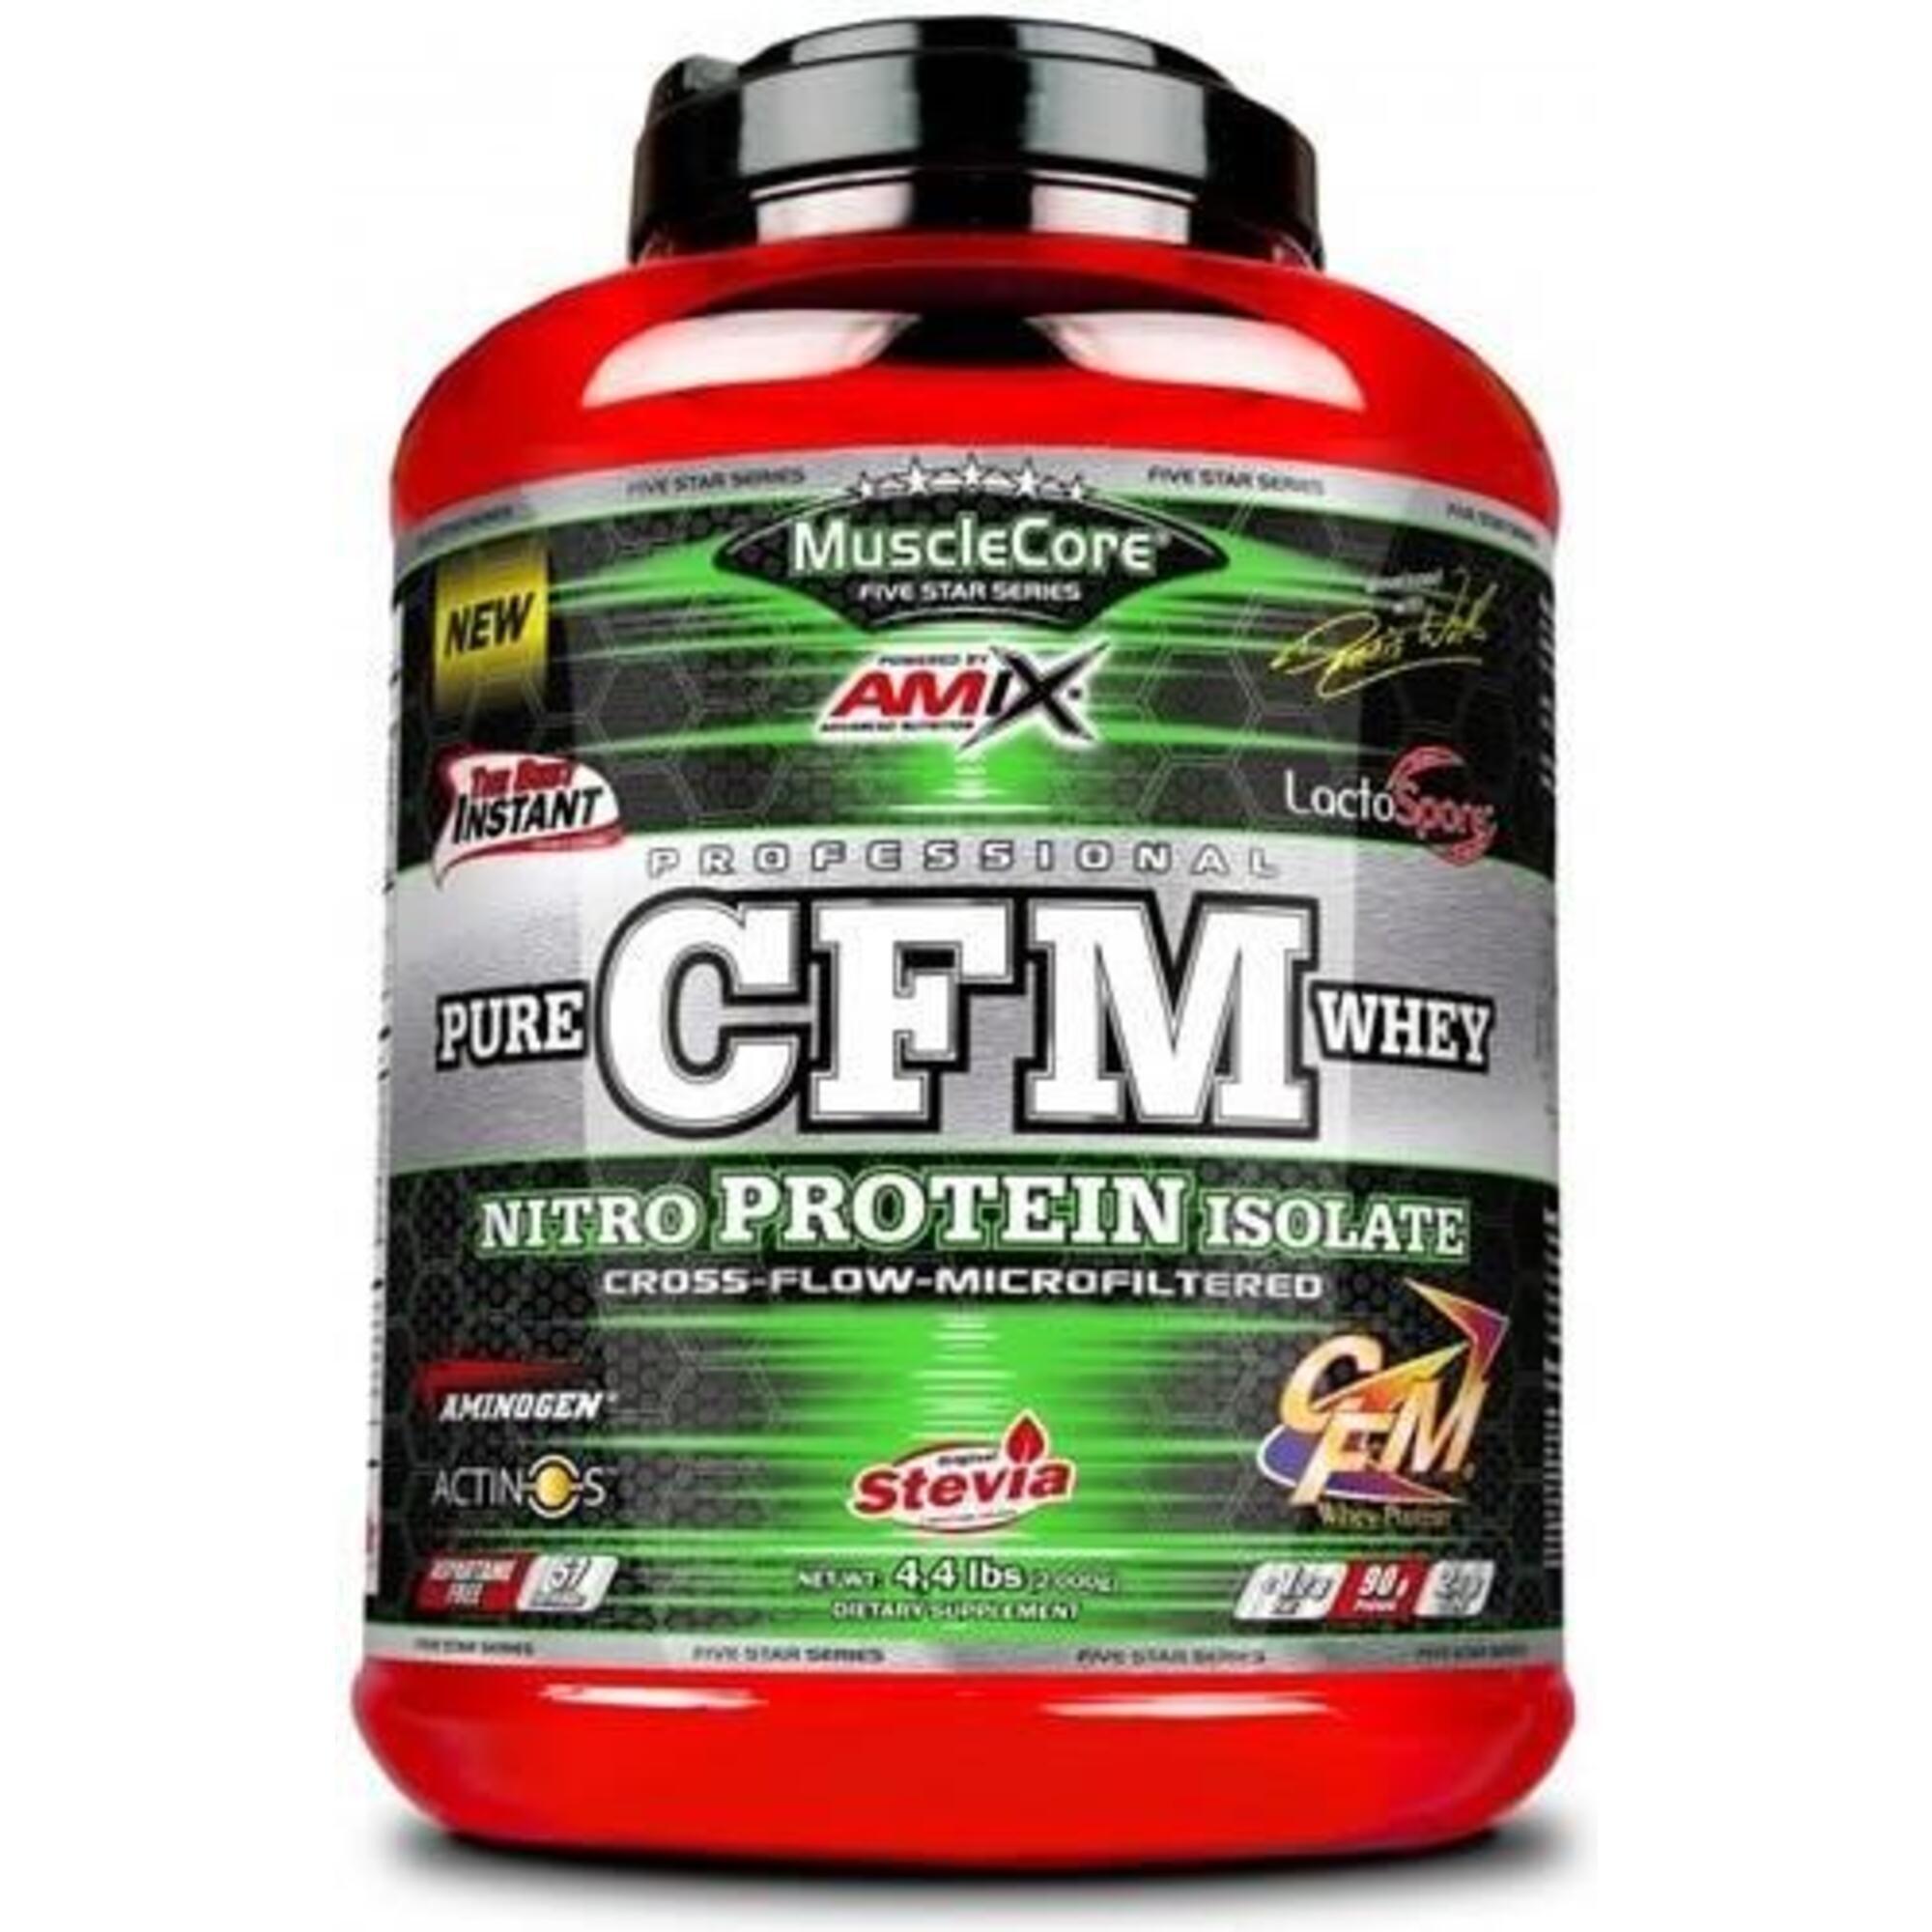 Amix MuscleCore CFM Nitro Protein Isolate 2 kg Proteína con Aminogen